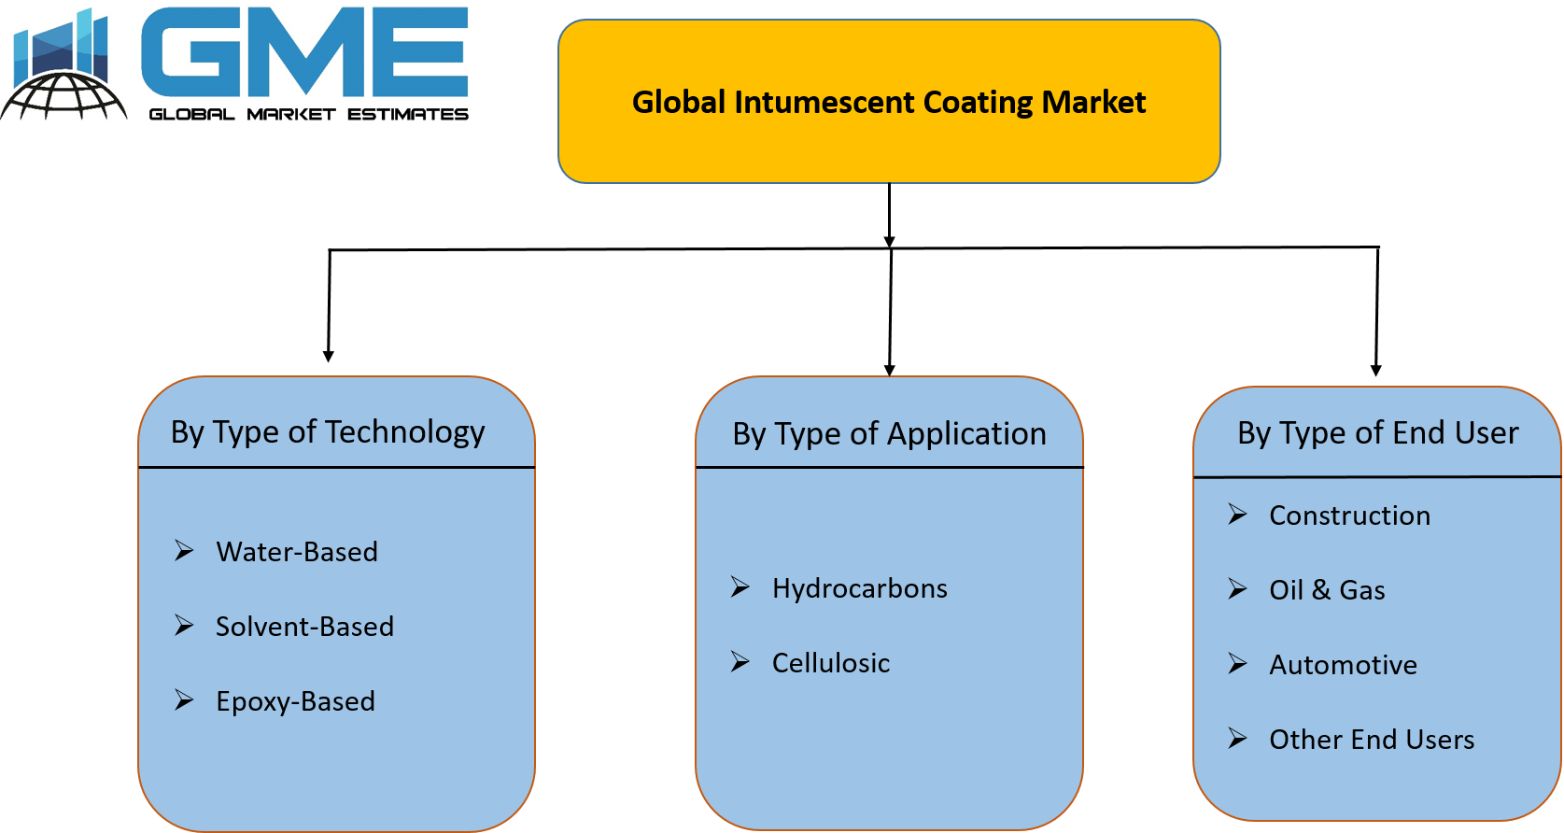 Global Intumescent Coating Market Segmentation